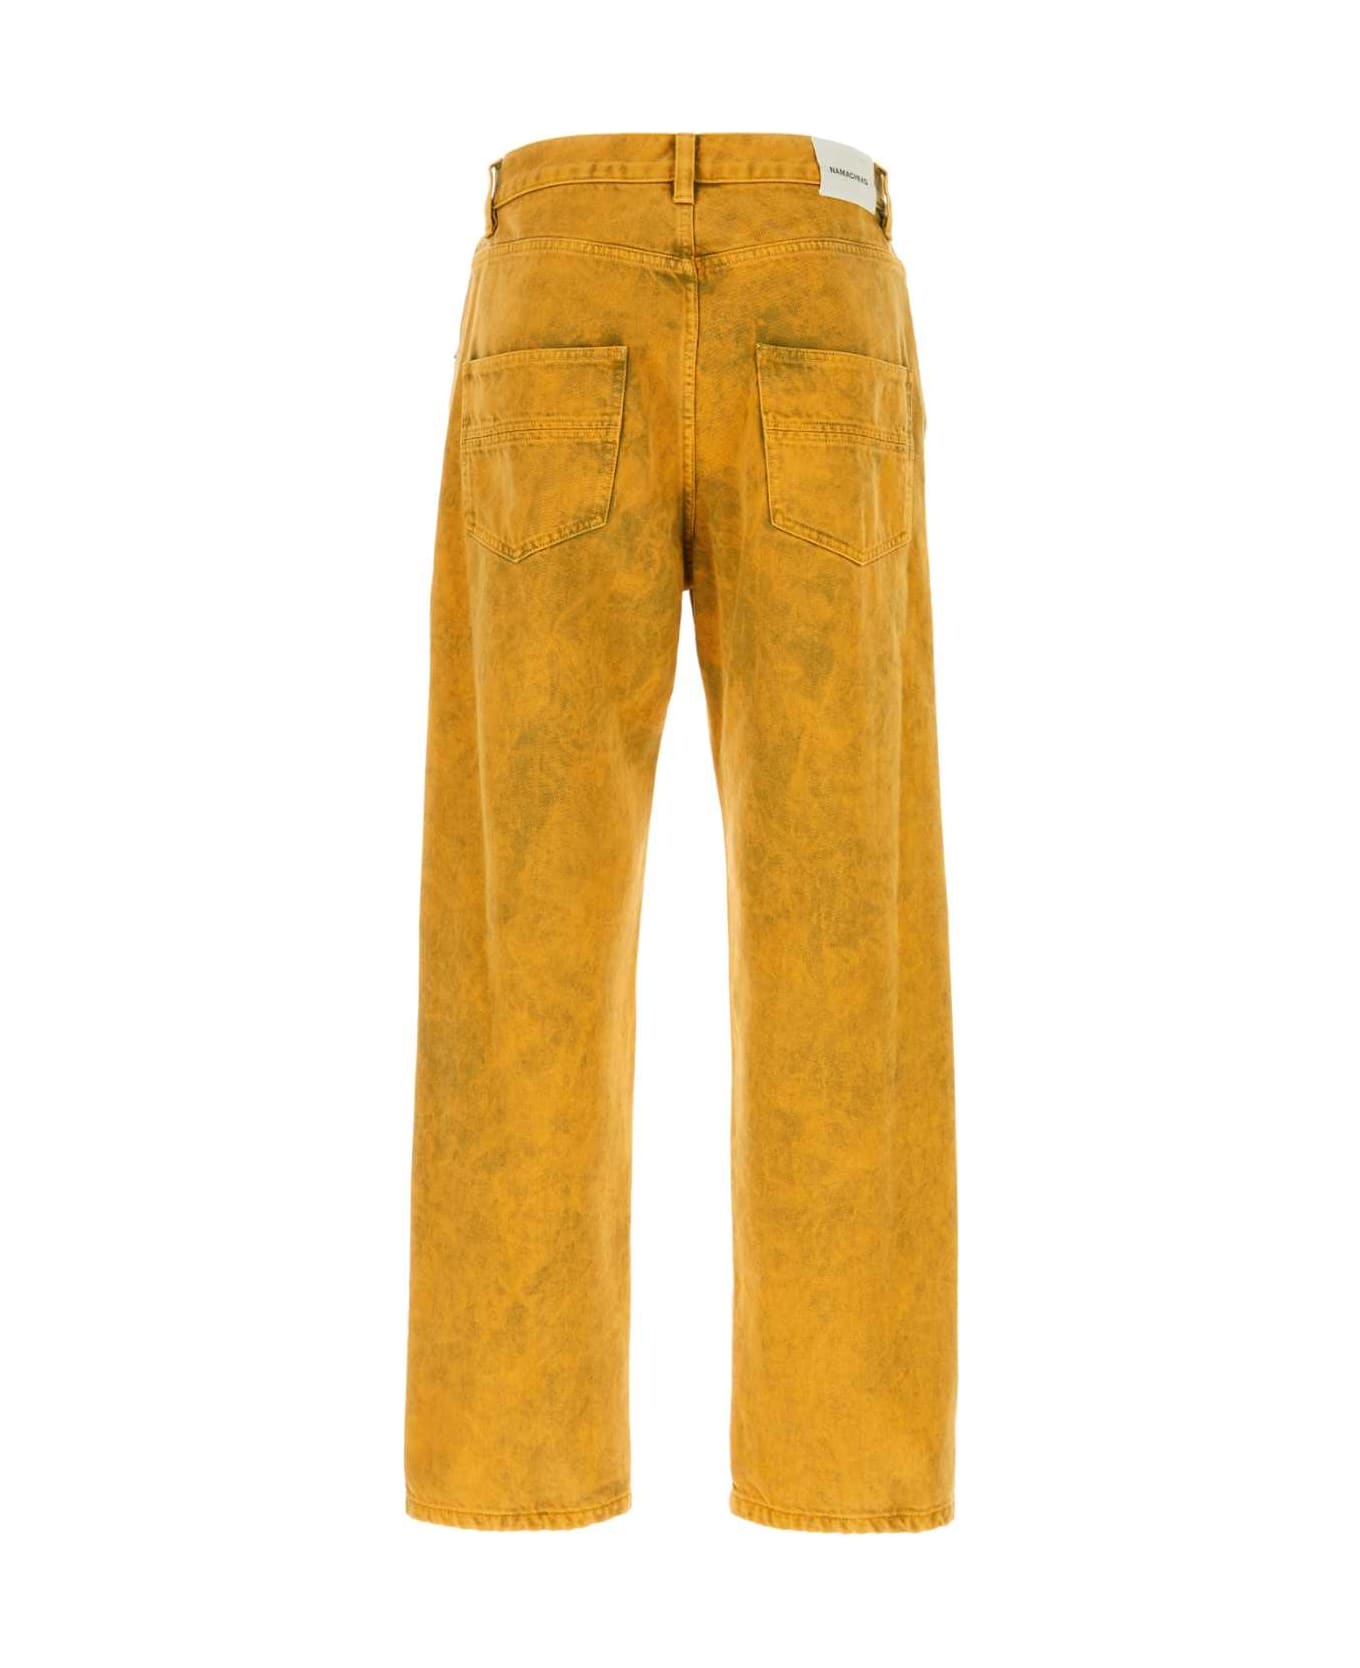 Namacheko Yellow Denim Warkworth Jeans - SKYMAGICIVORYFROSTEDKHAKI ボトムス